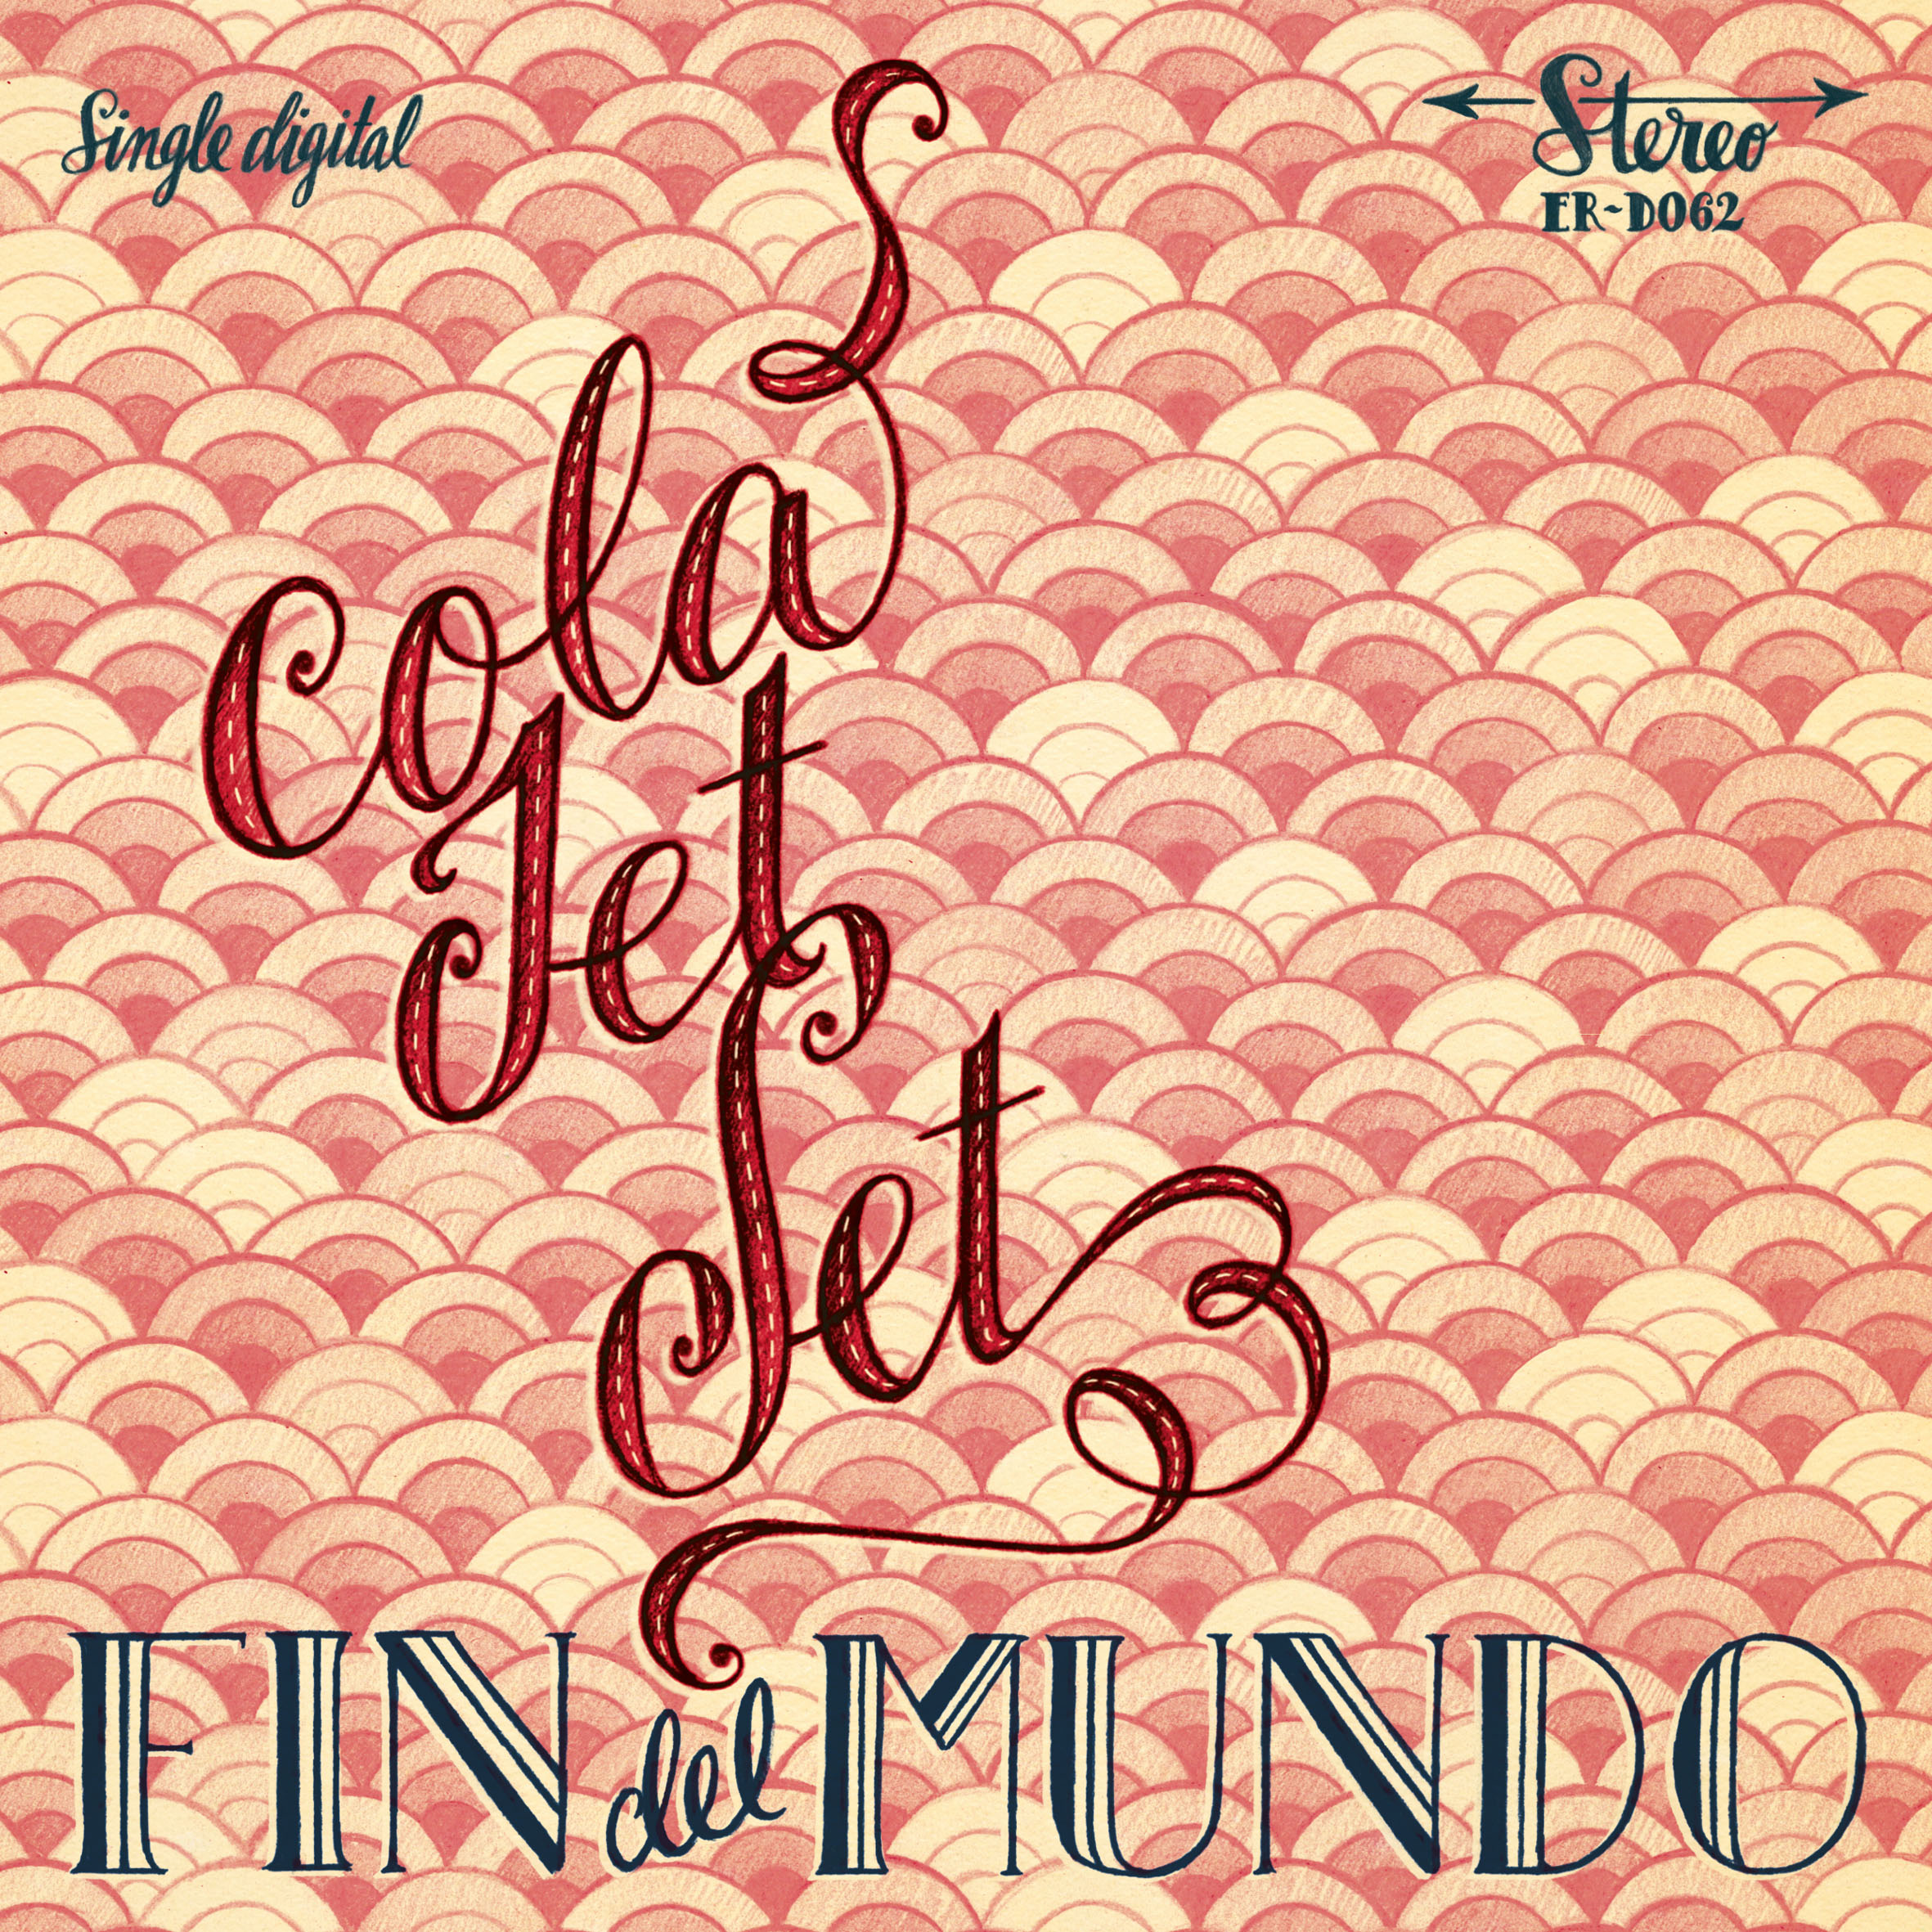 Cola Jet Set "Fin Del Mundo" Single Digital